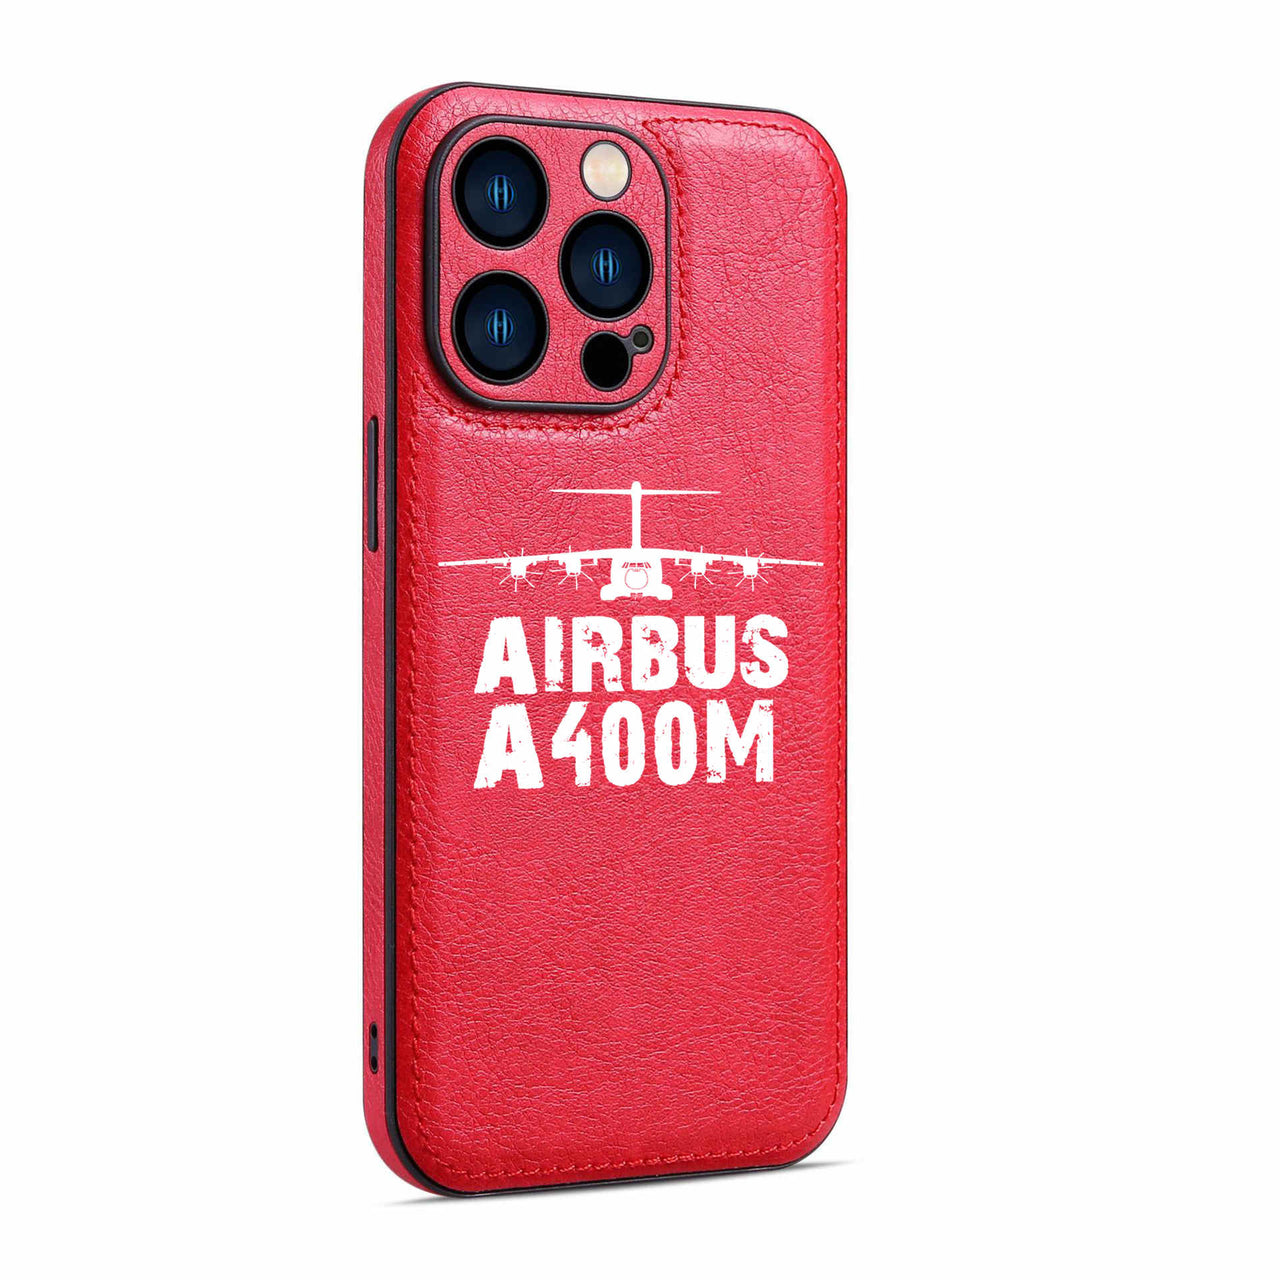 Airbus A400M & Plane Designed Leather iPhone Cases